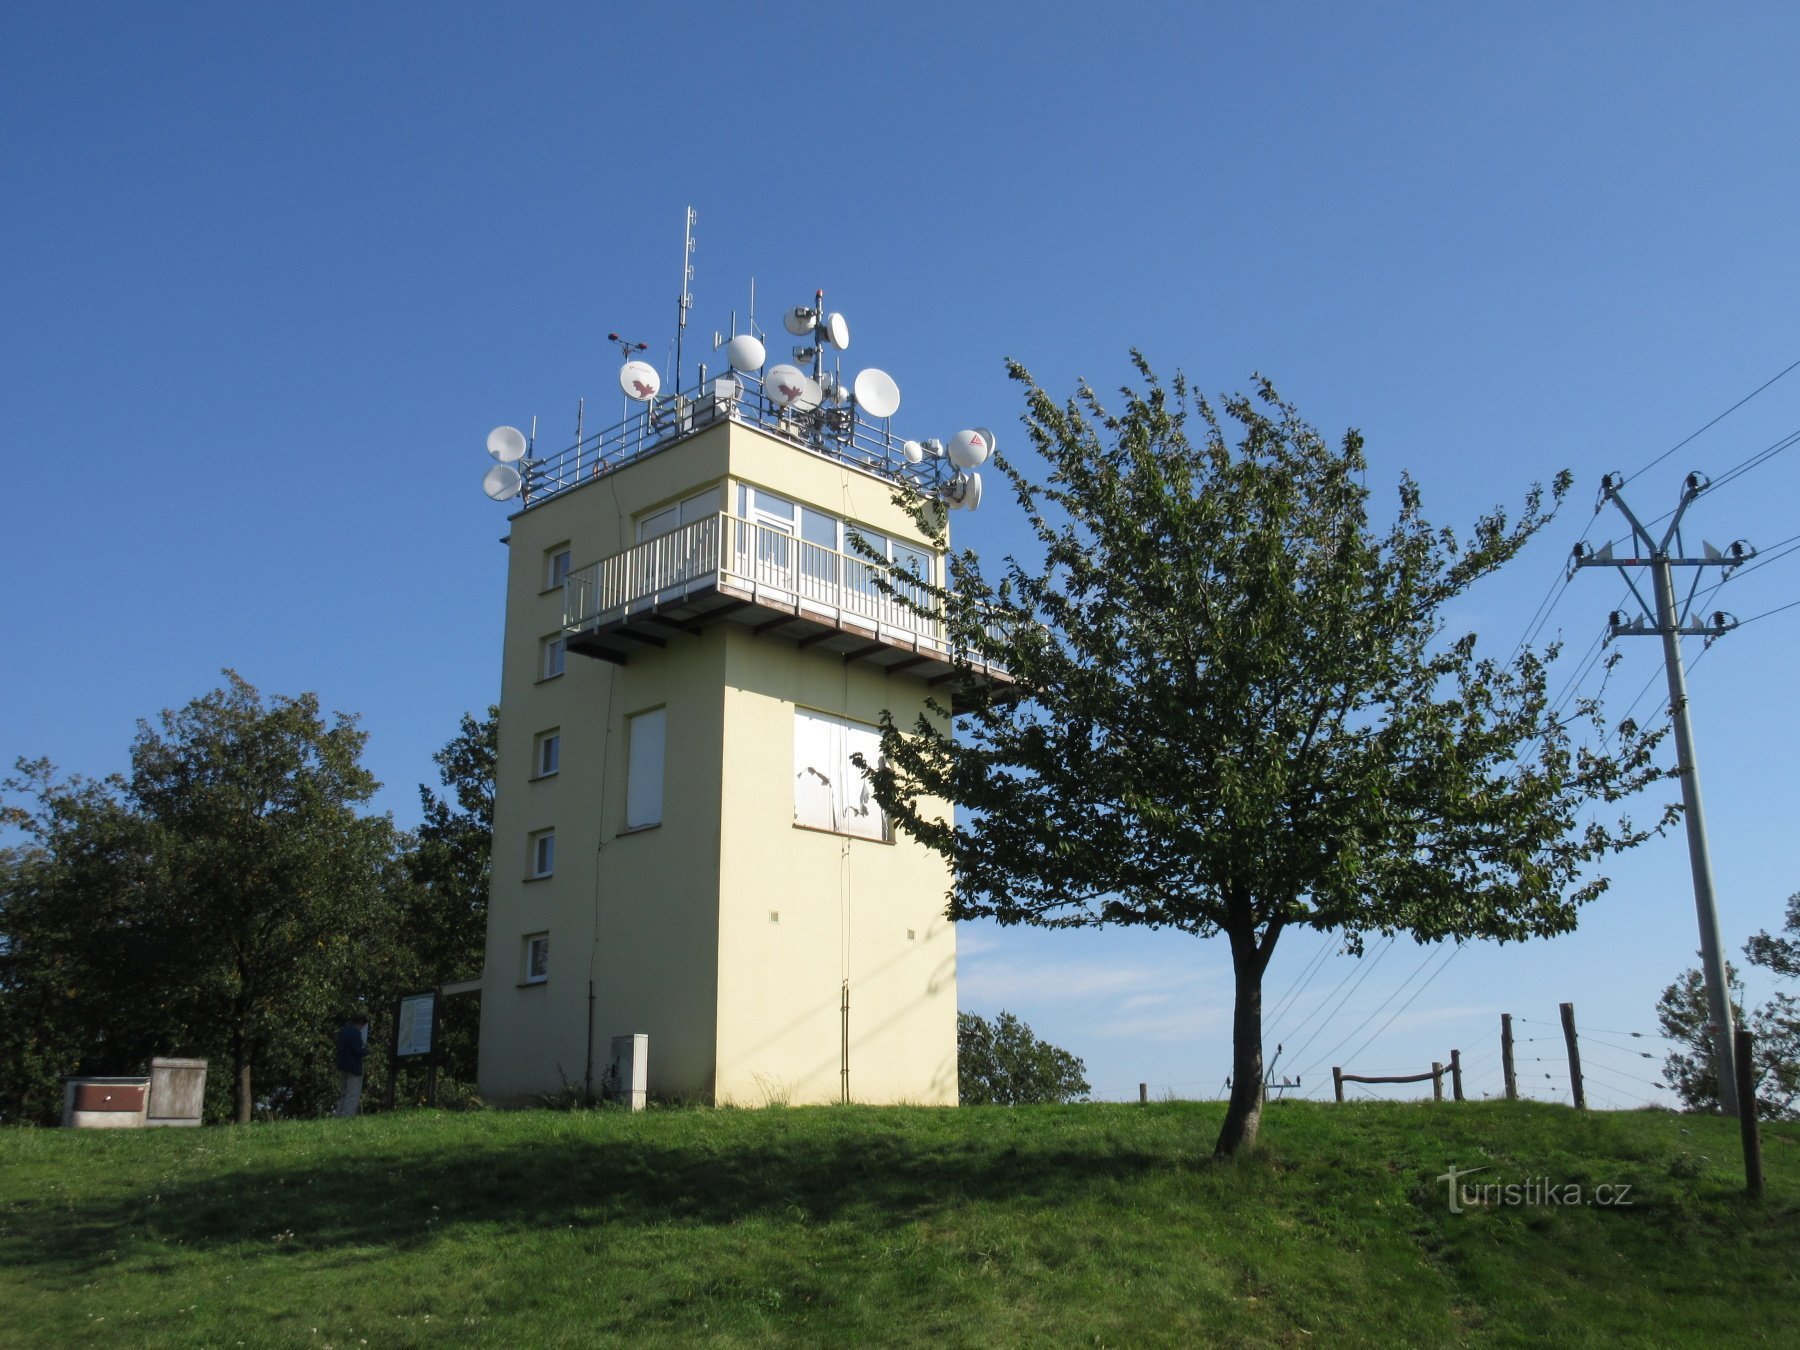 Малхостовице – деревня и смотровая башня Злобице